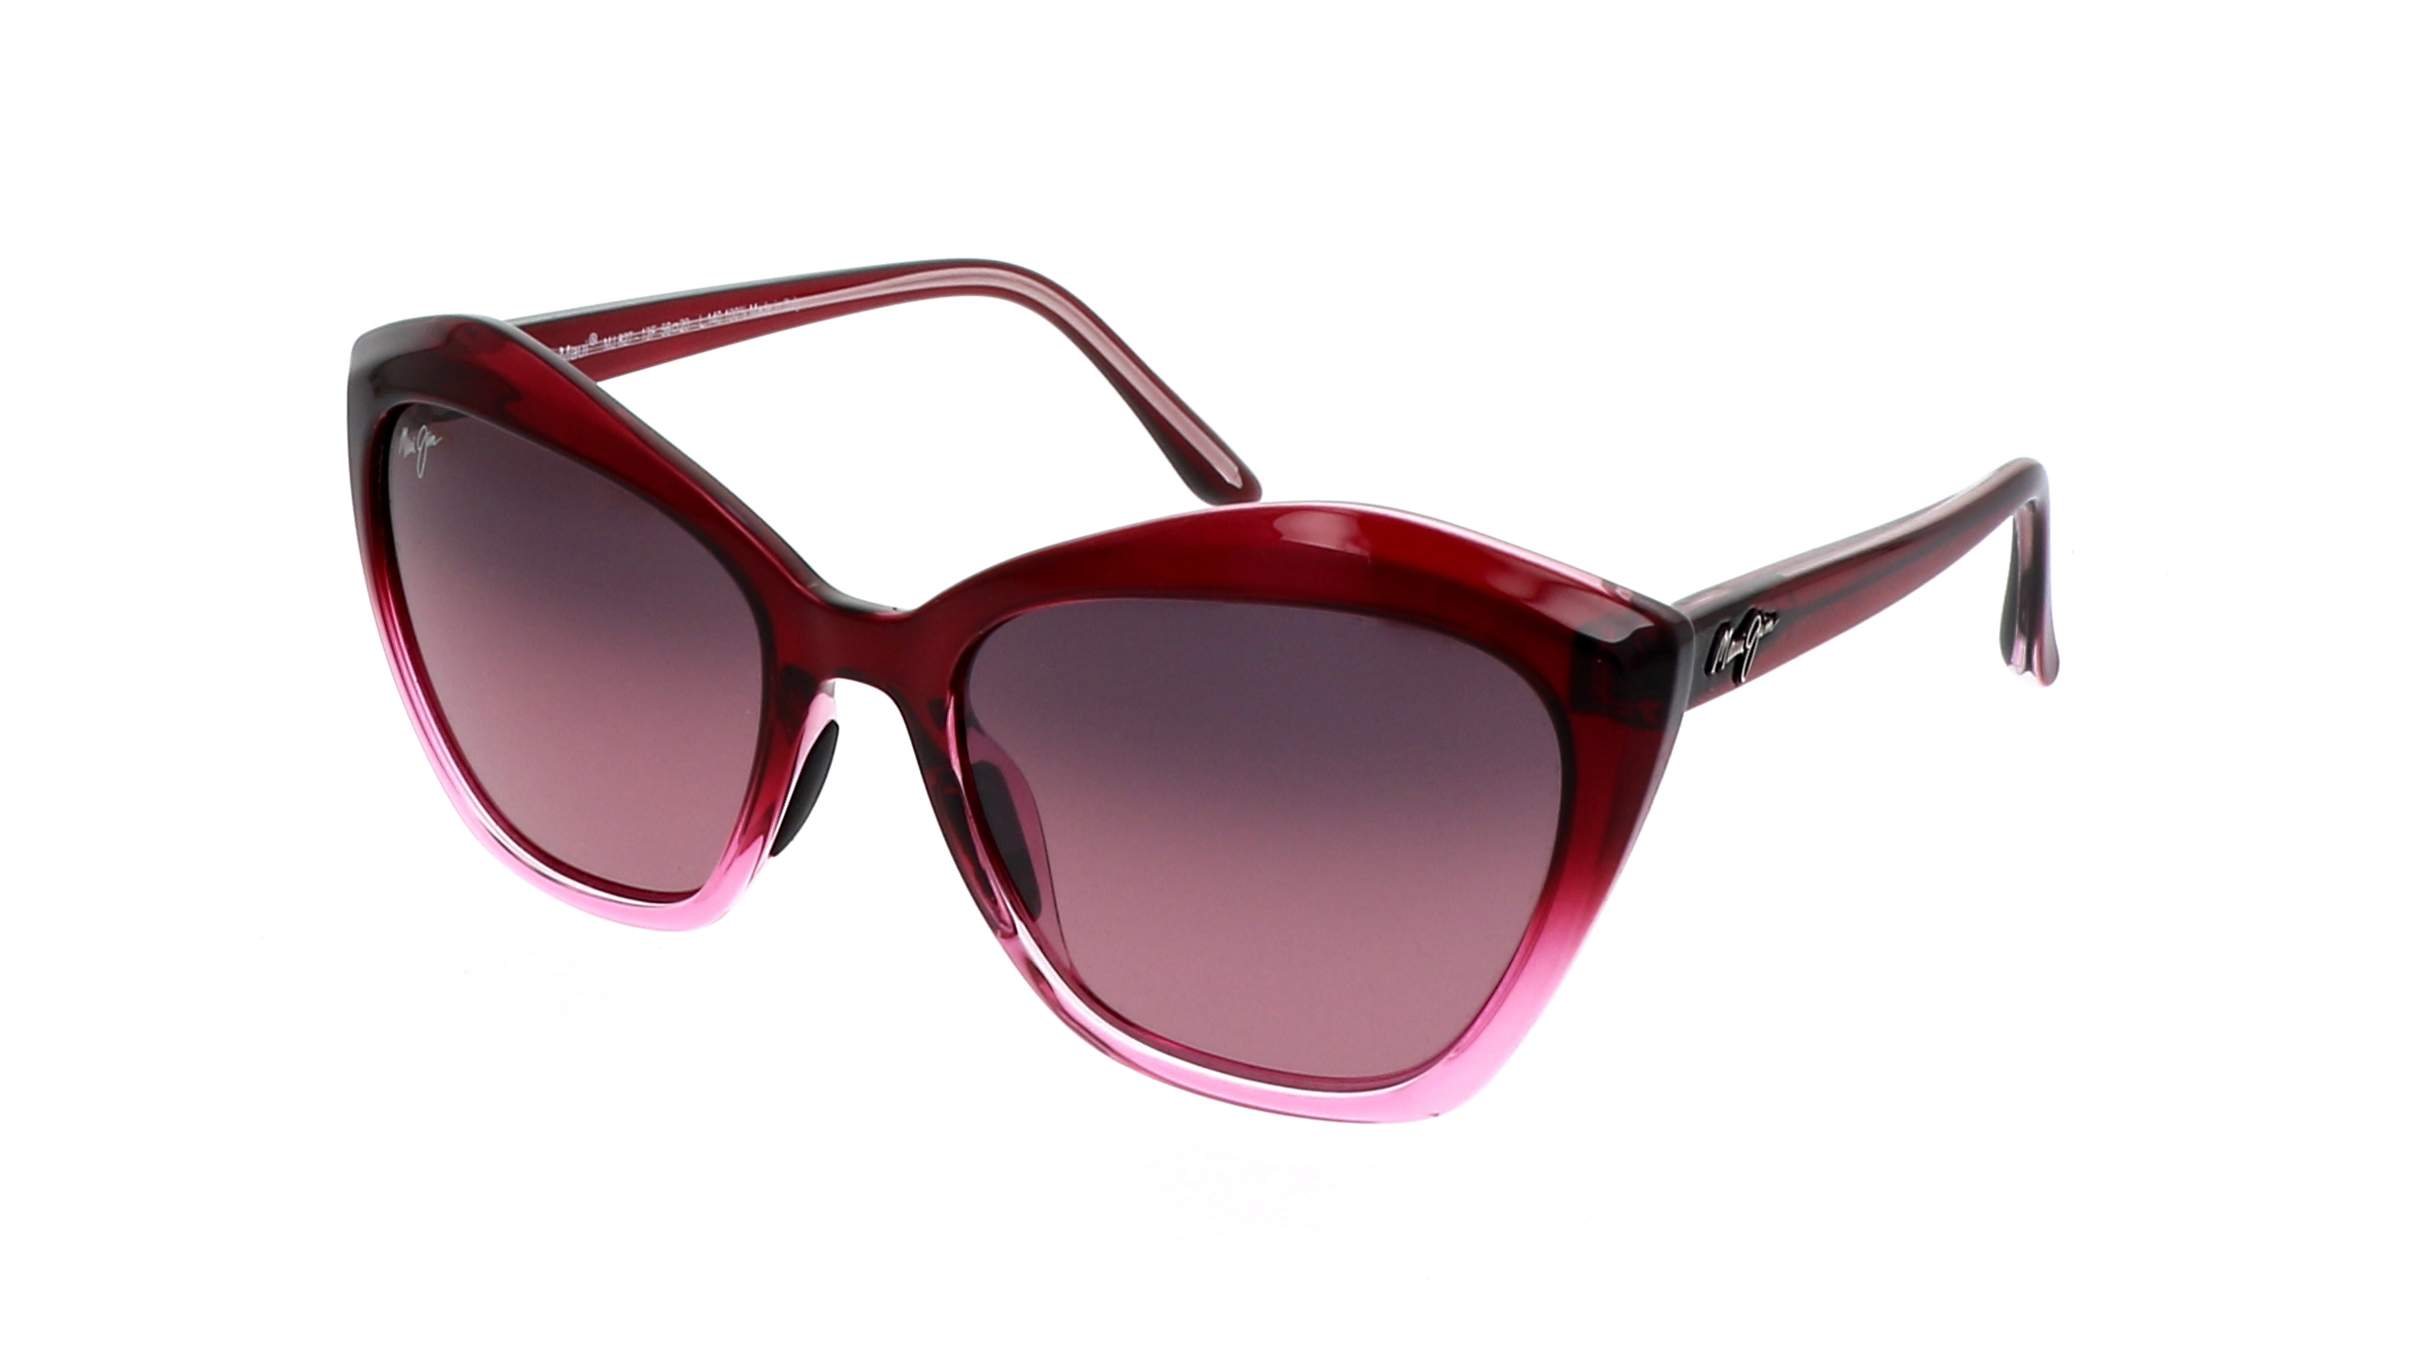 Sunglasses Maui Jim Lotus Red Super thin glass RS827-13F 56-20 ...